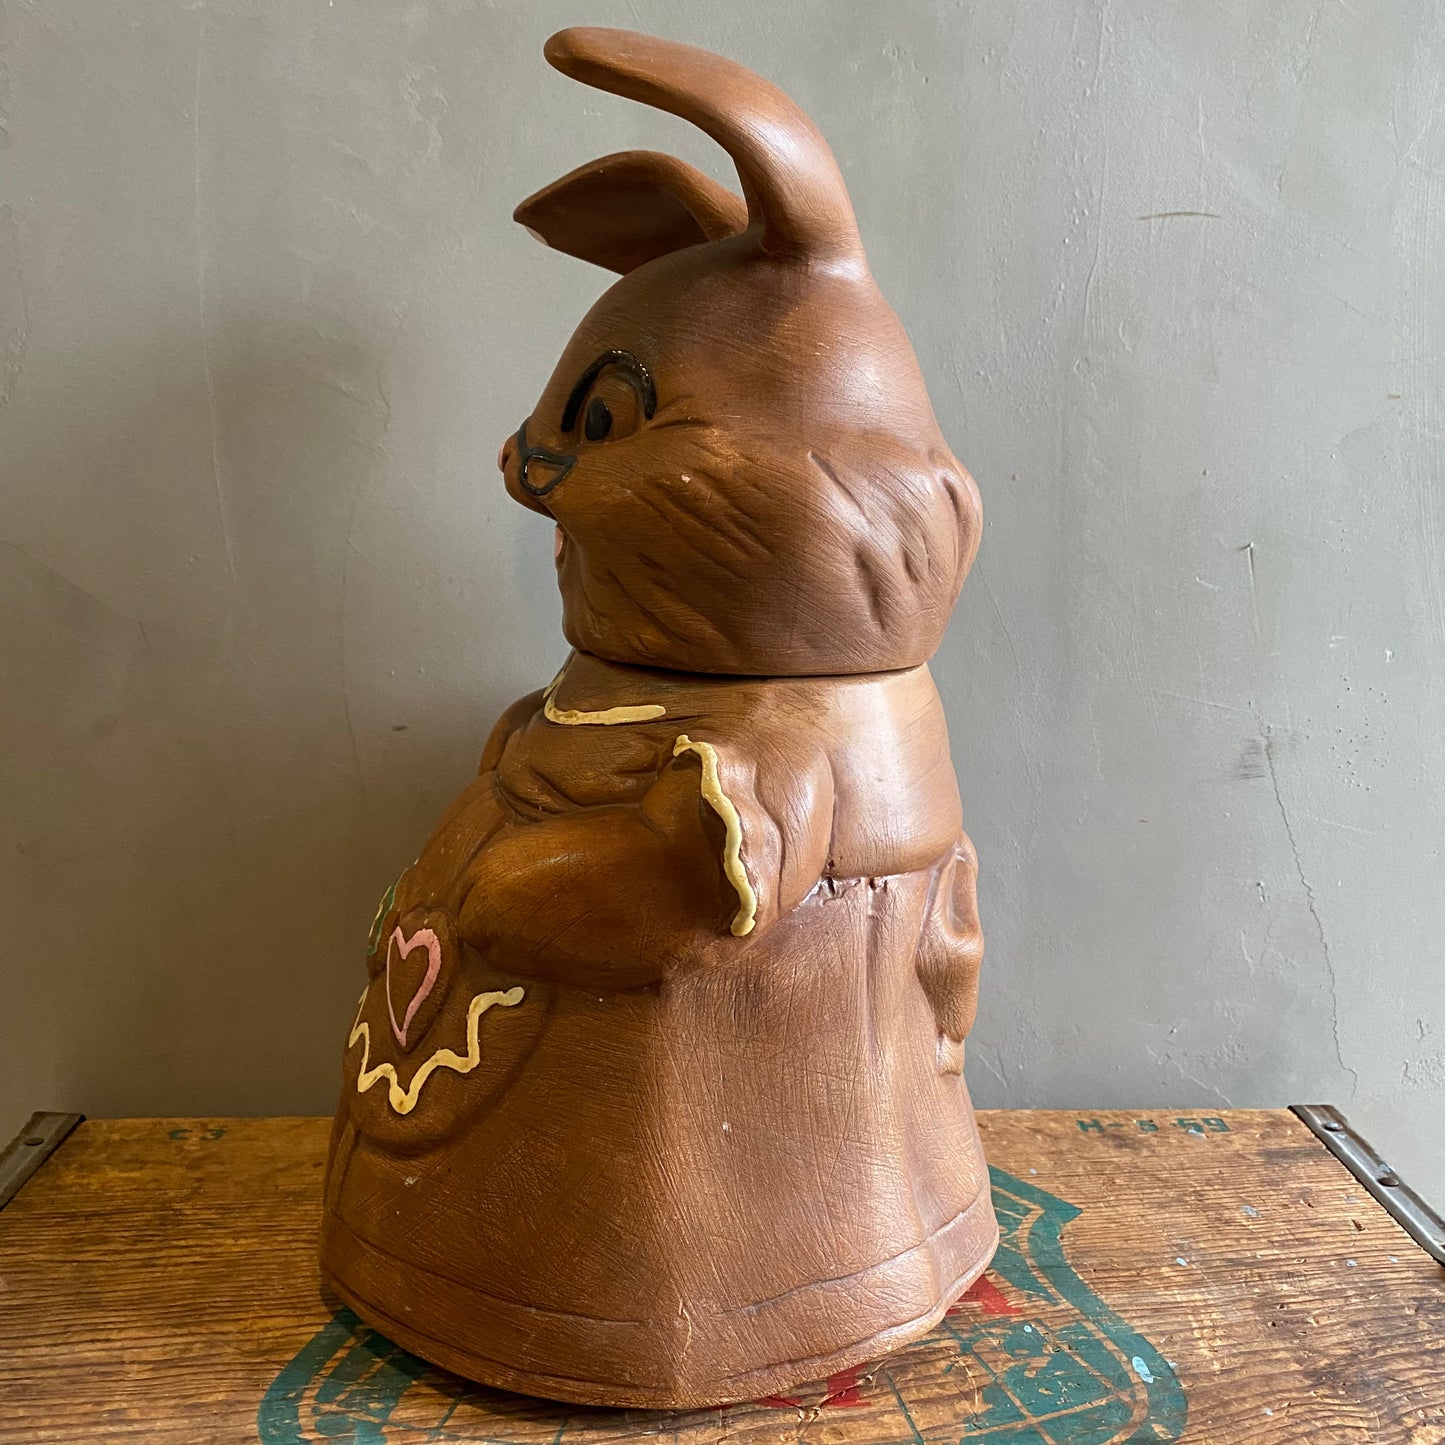 【1958 USA vintage】Easter bunny クッキージャー